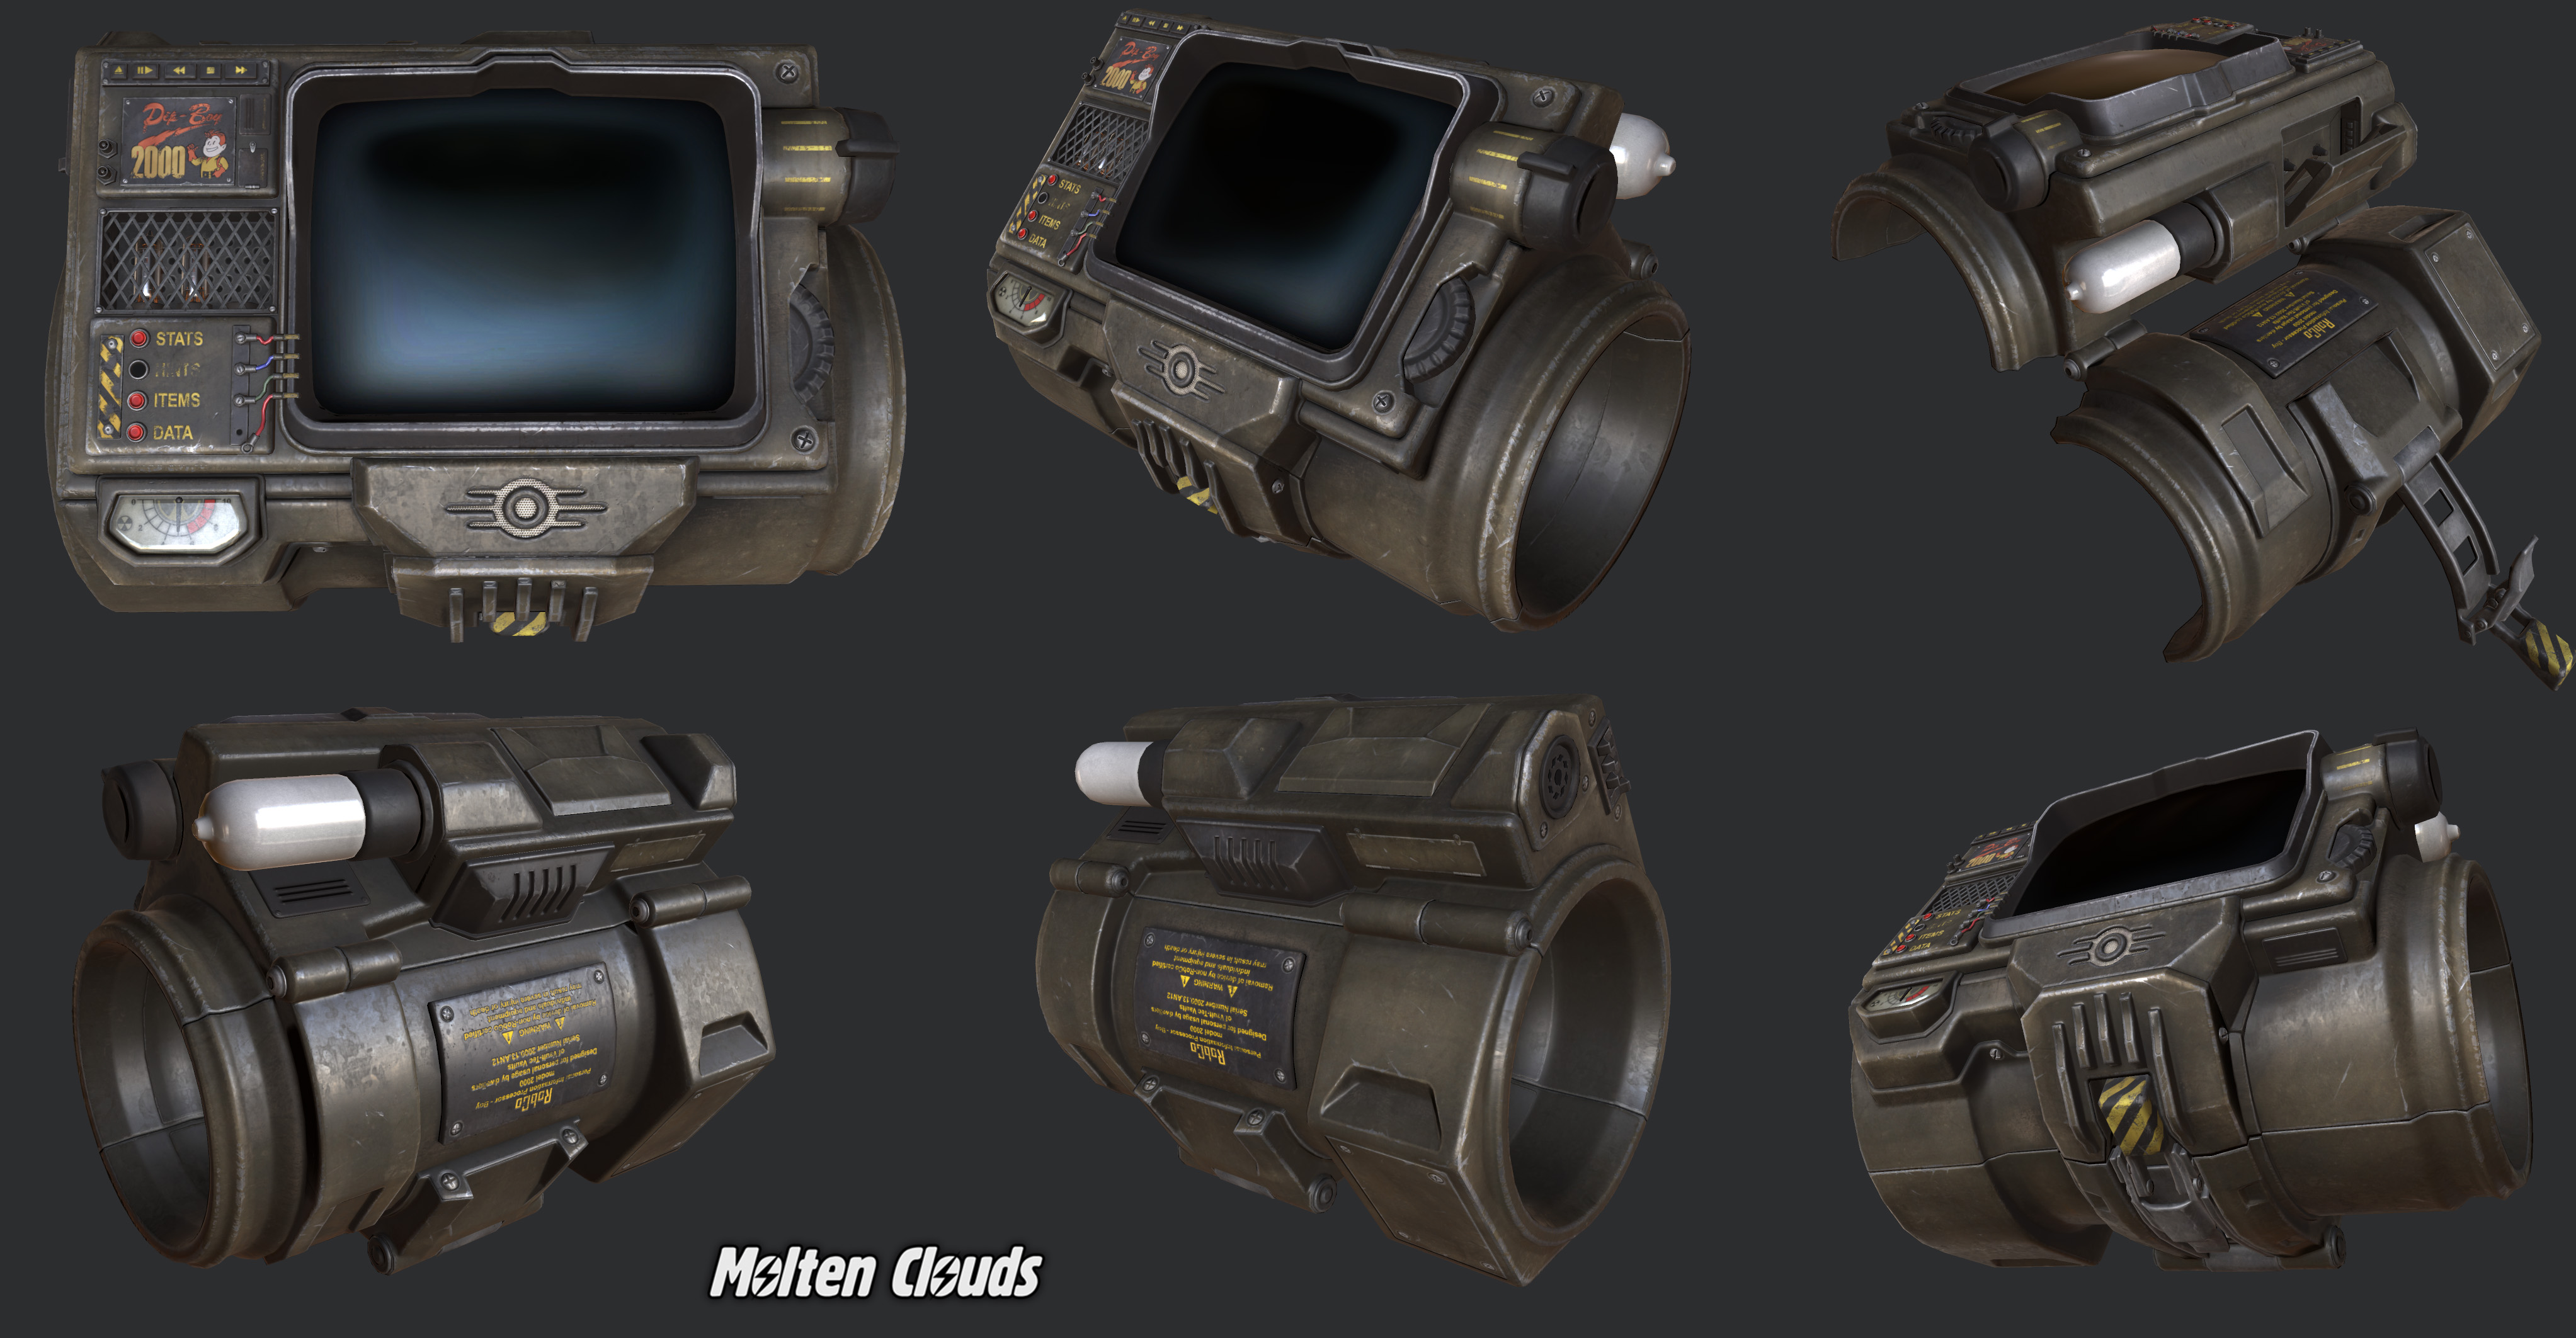 Pip-Boy 2000 image - The Chosen's Way mod for Fallout: New Vegas - Mod DB